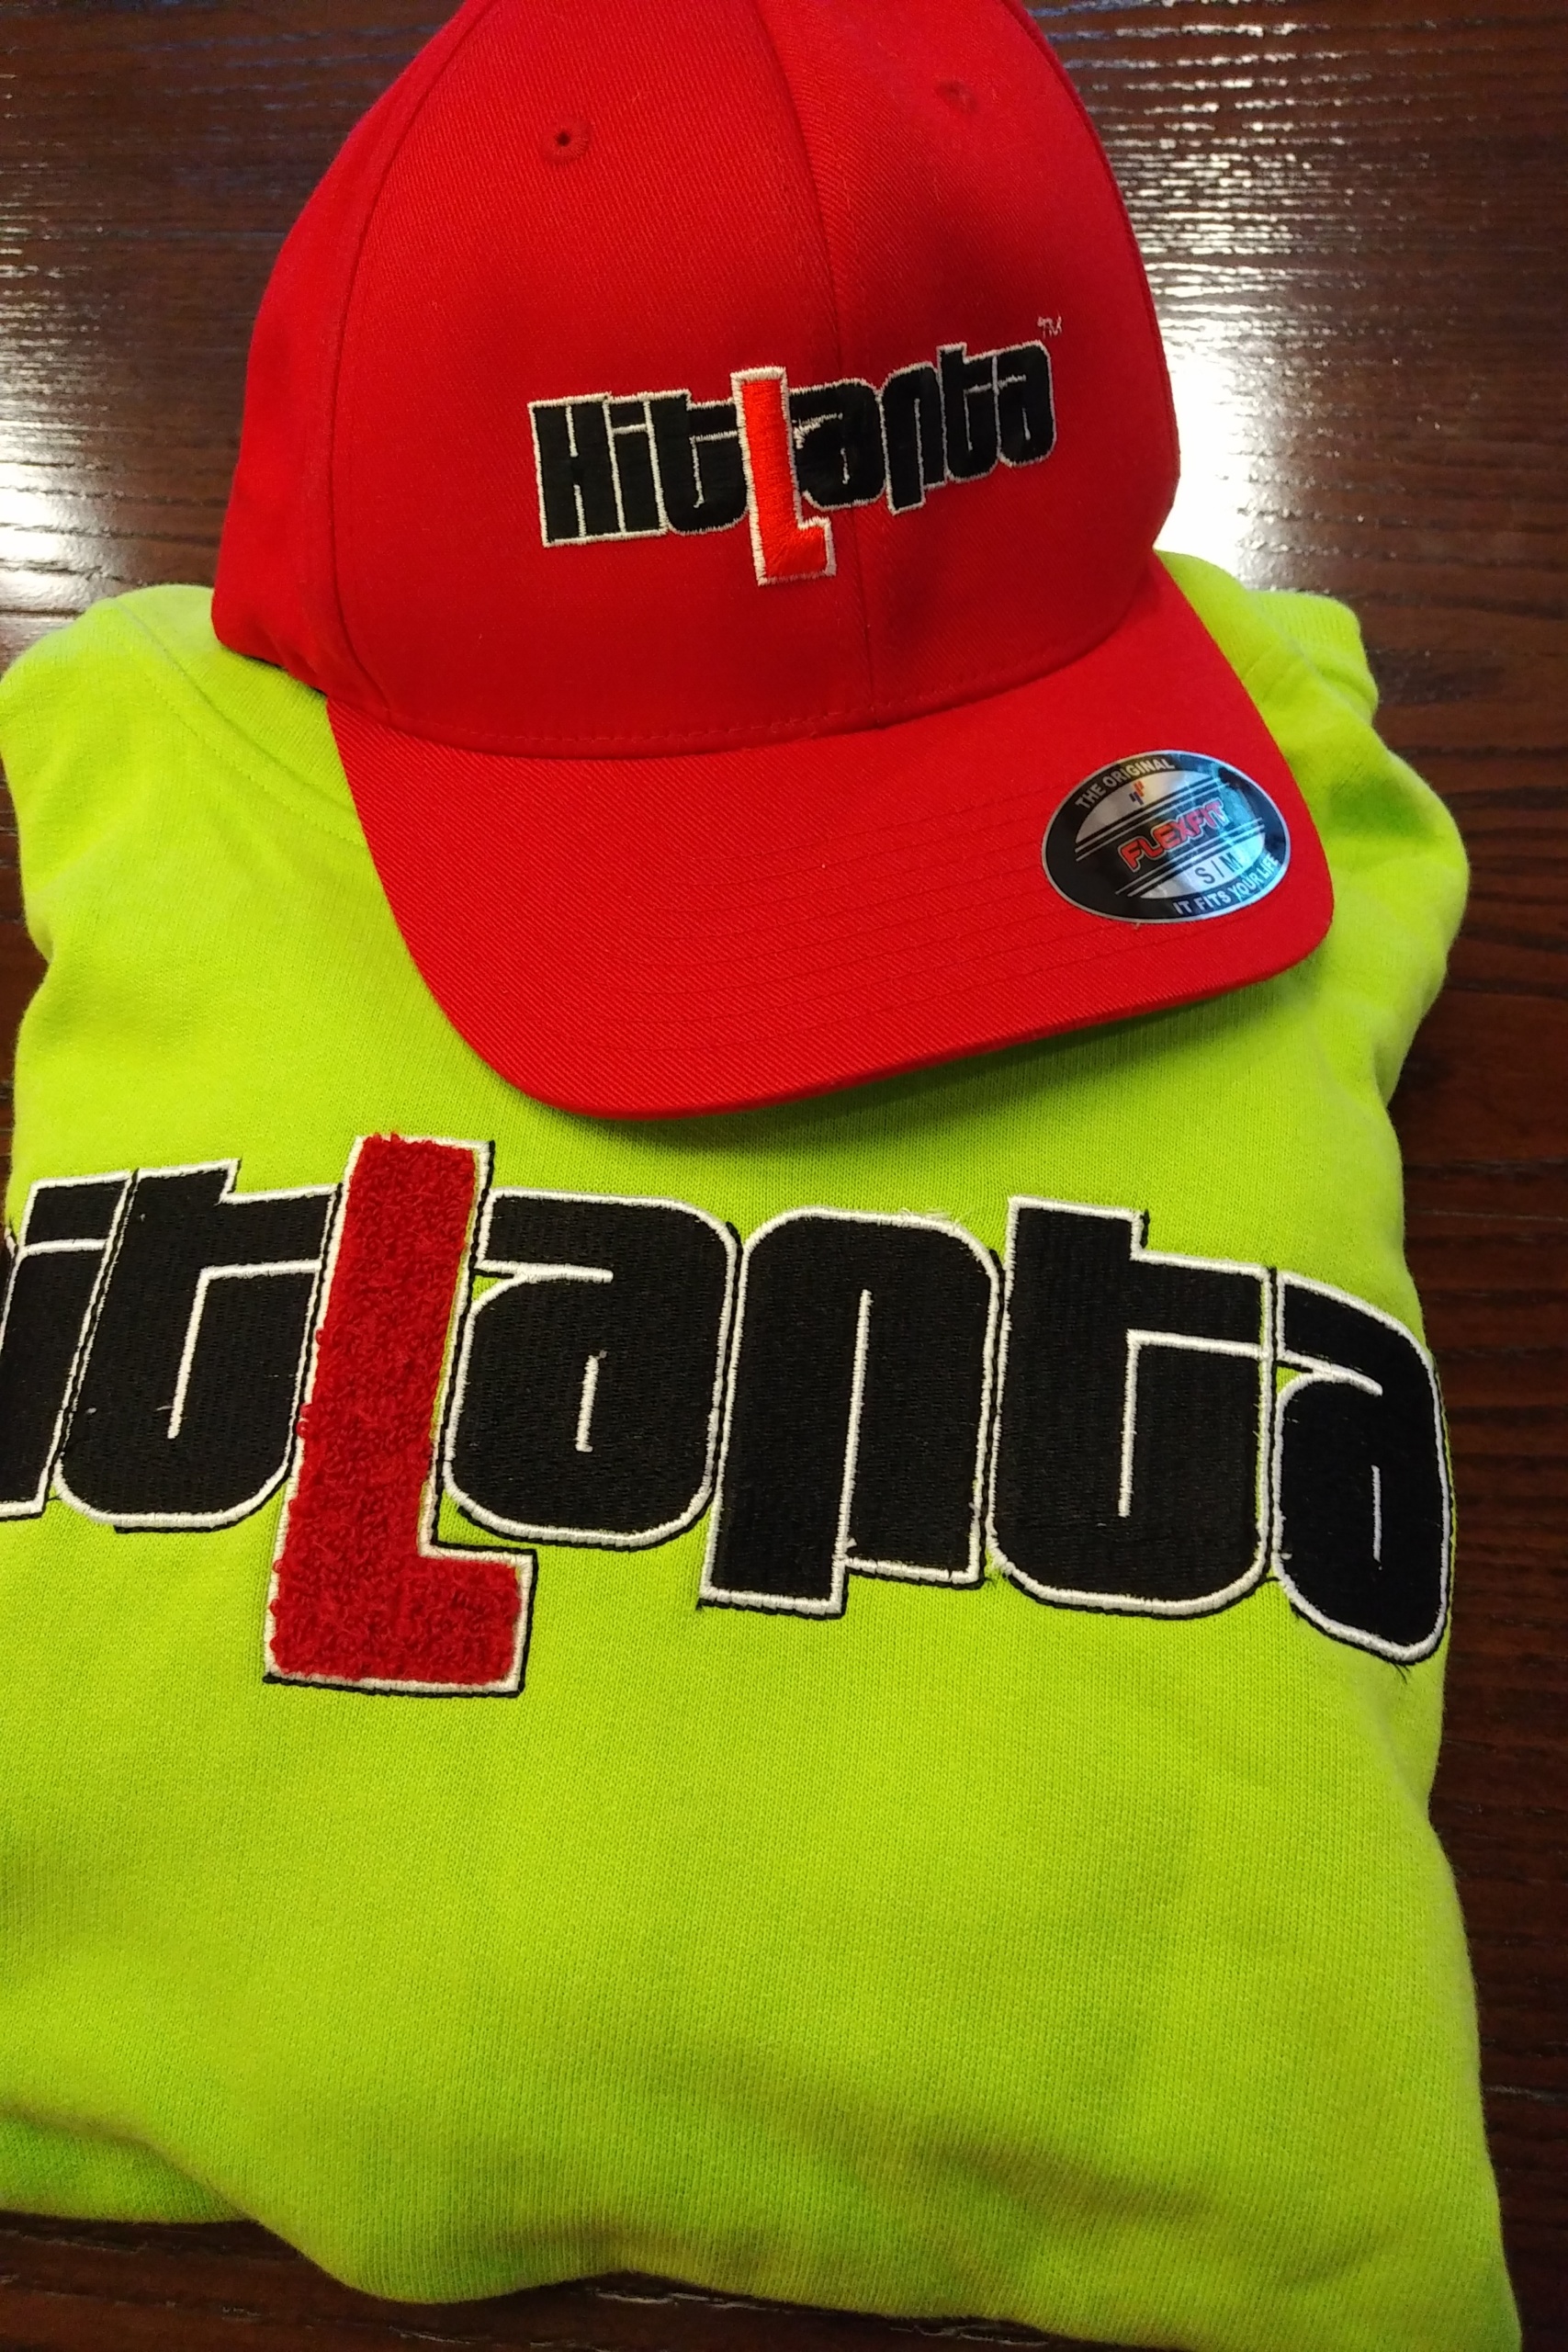 Hitlanta Merchandise (1)